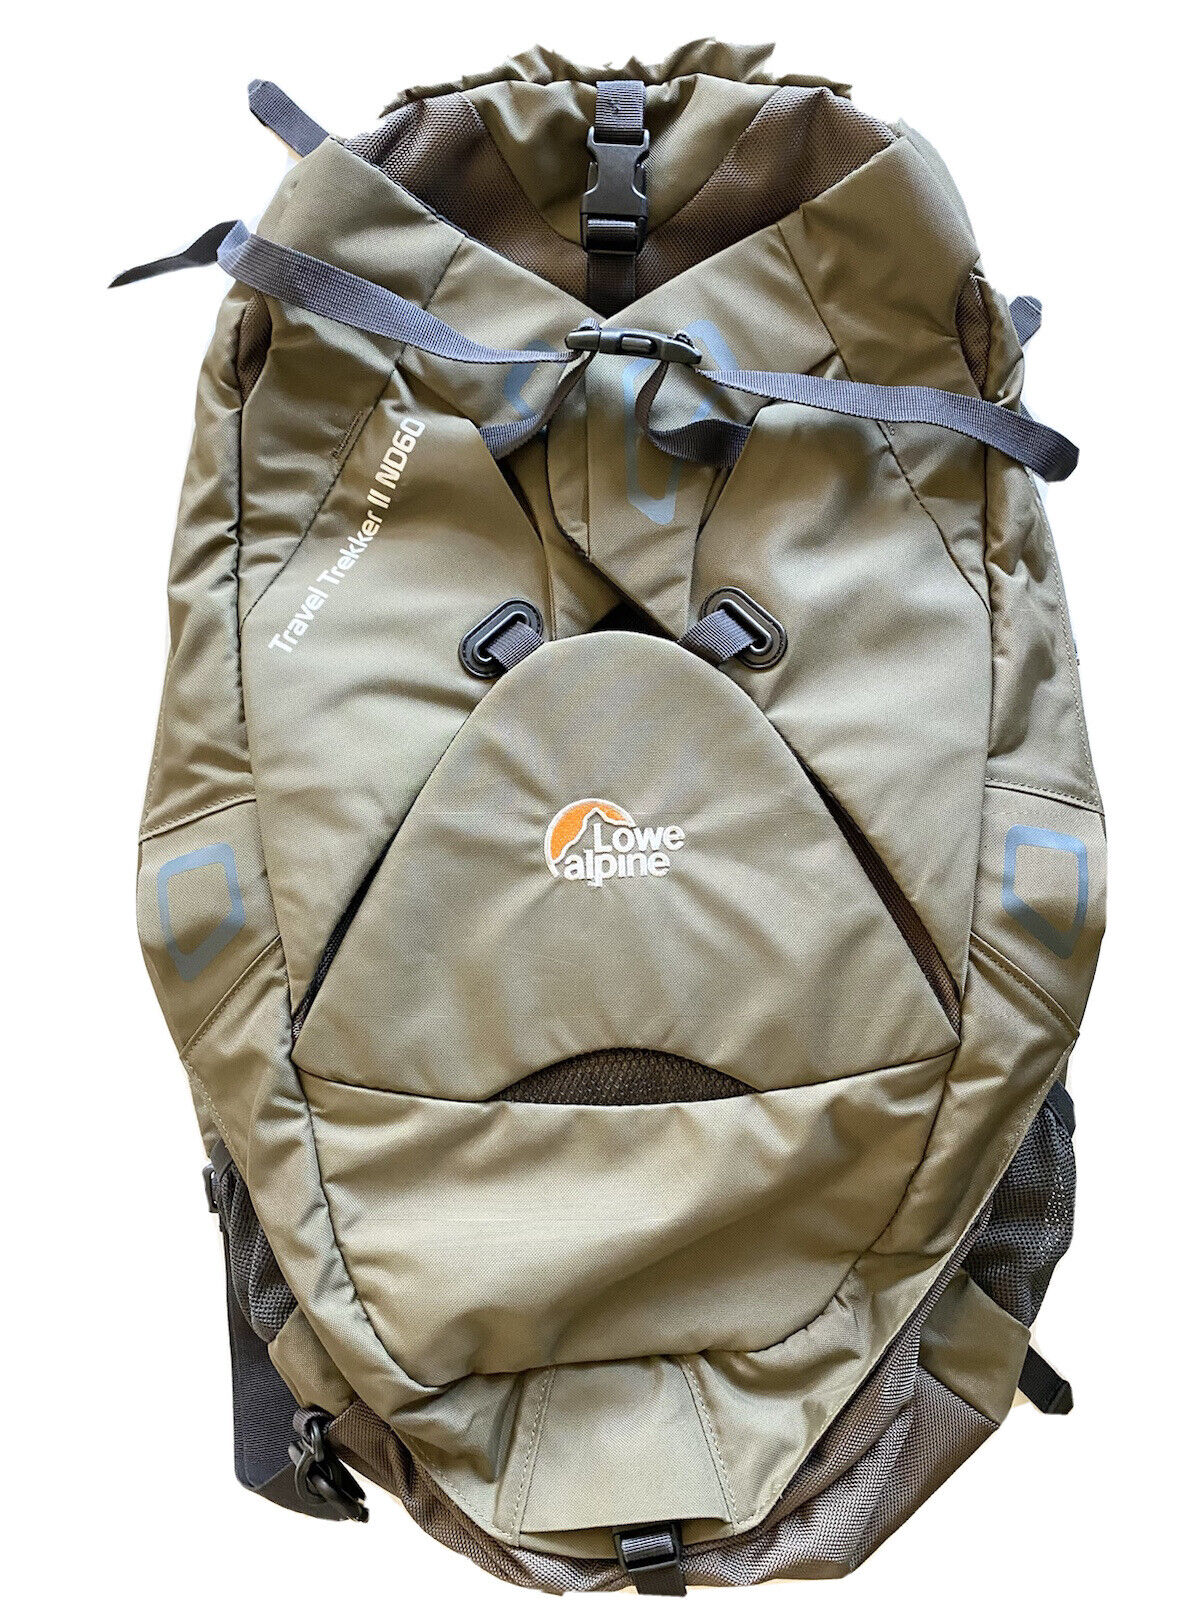 Marco Polo oplichter keuken Lowe Alpine Backpack Bag Luggage Tour Travel Trekker ND 60 Khaki Black |  eBay